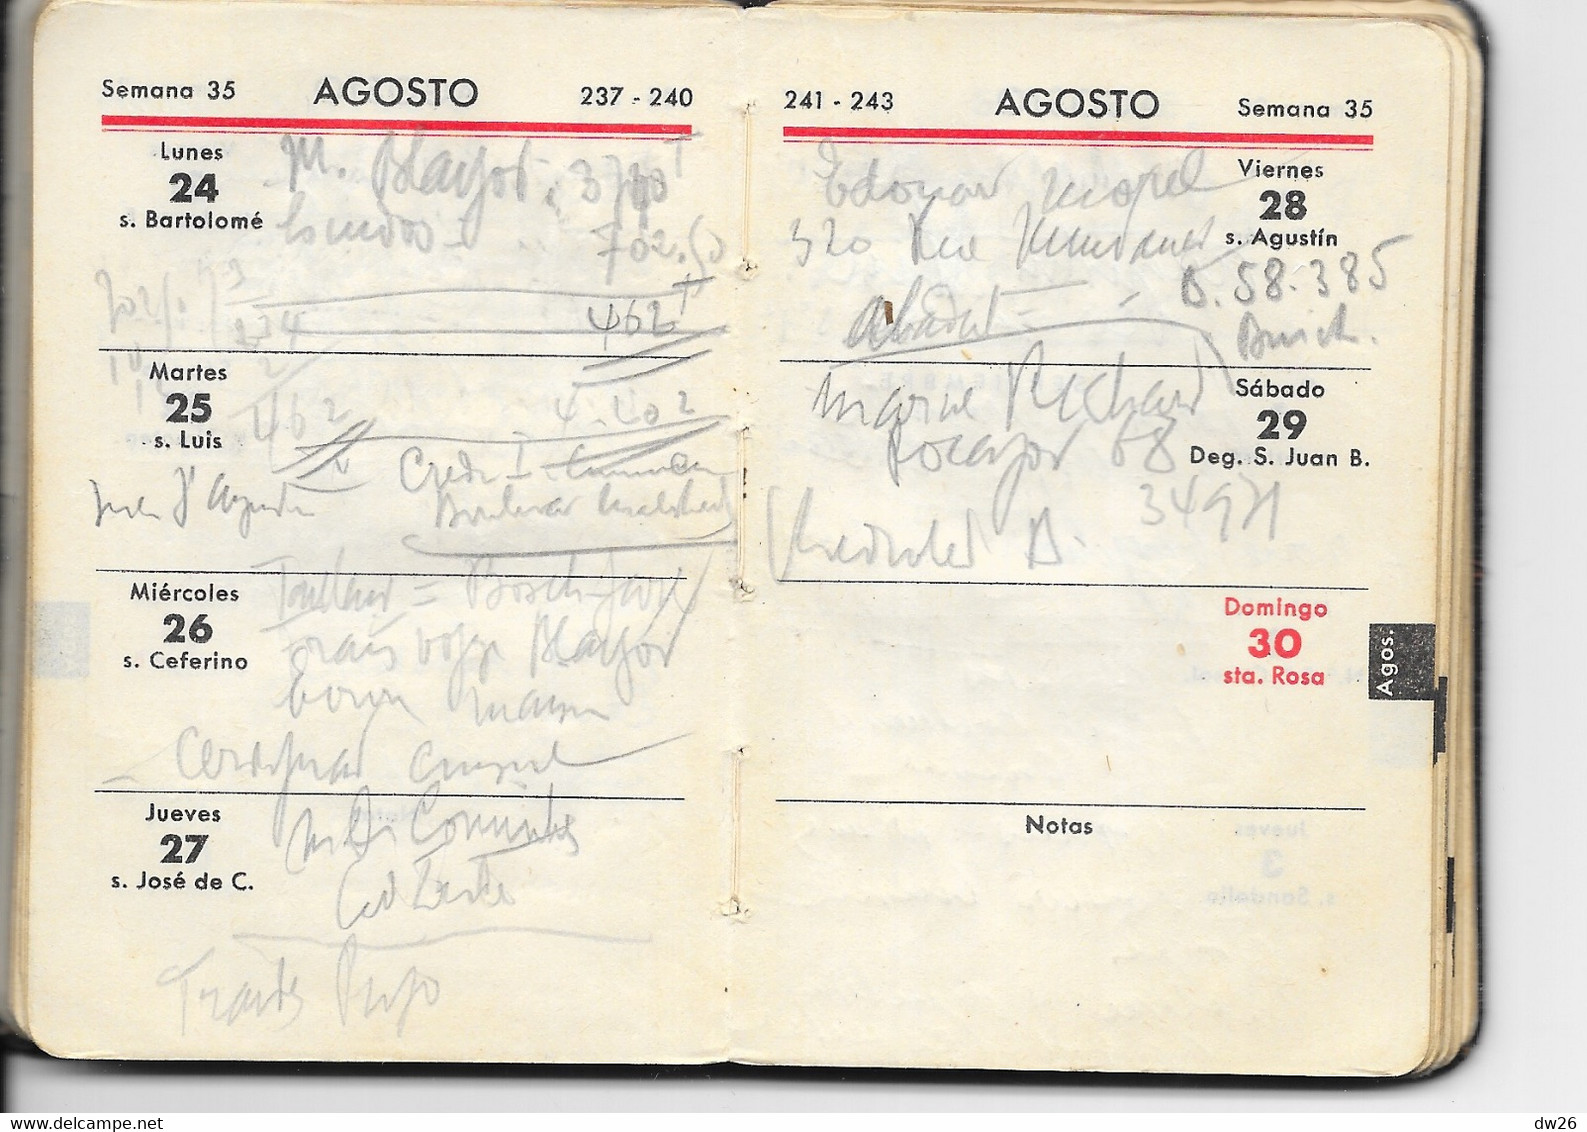 Agenda, calendrier 1936 - Carnet cuir, Publicité Tudor (Acumulador, accumulateurs) Pertrix (Pilas, Piles)